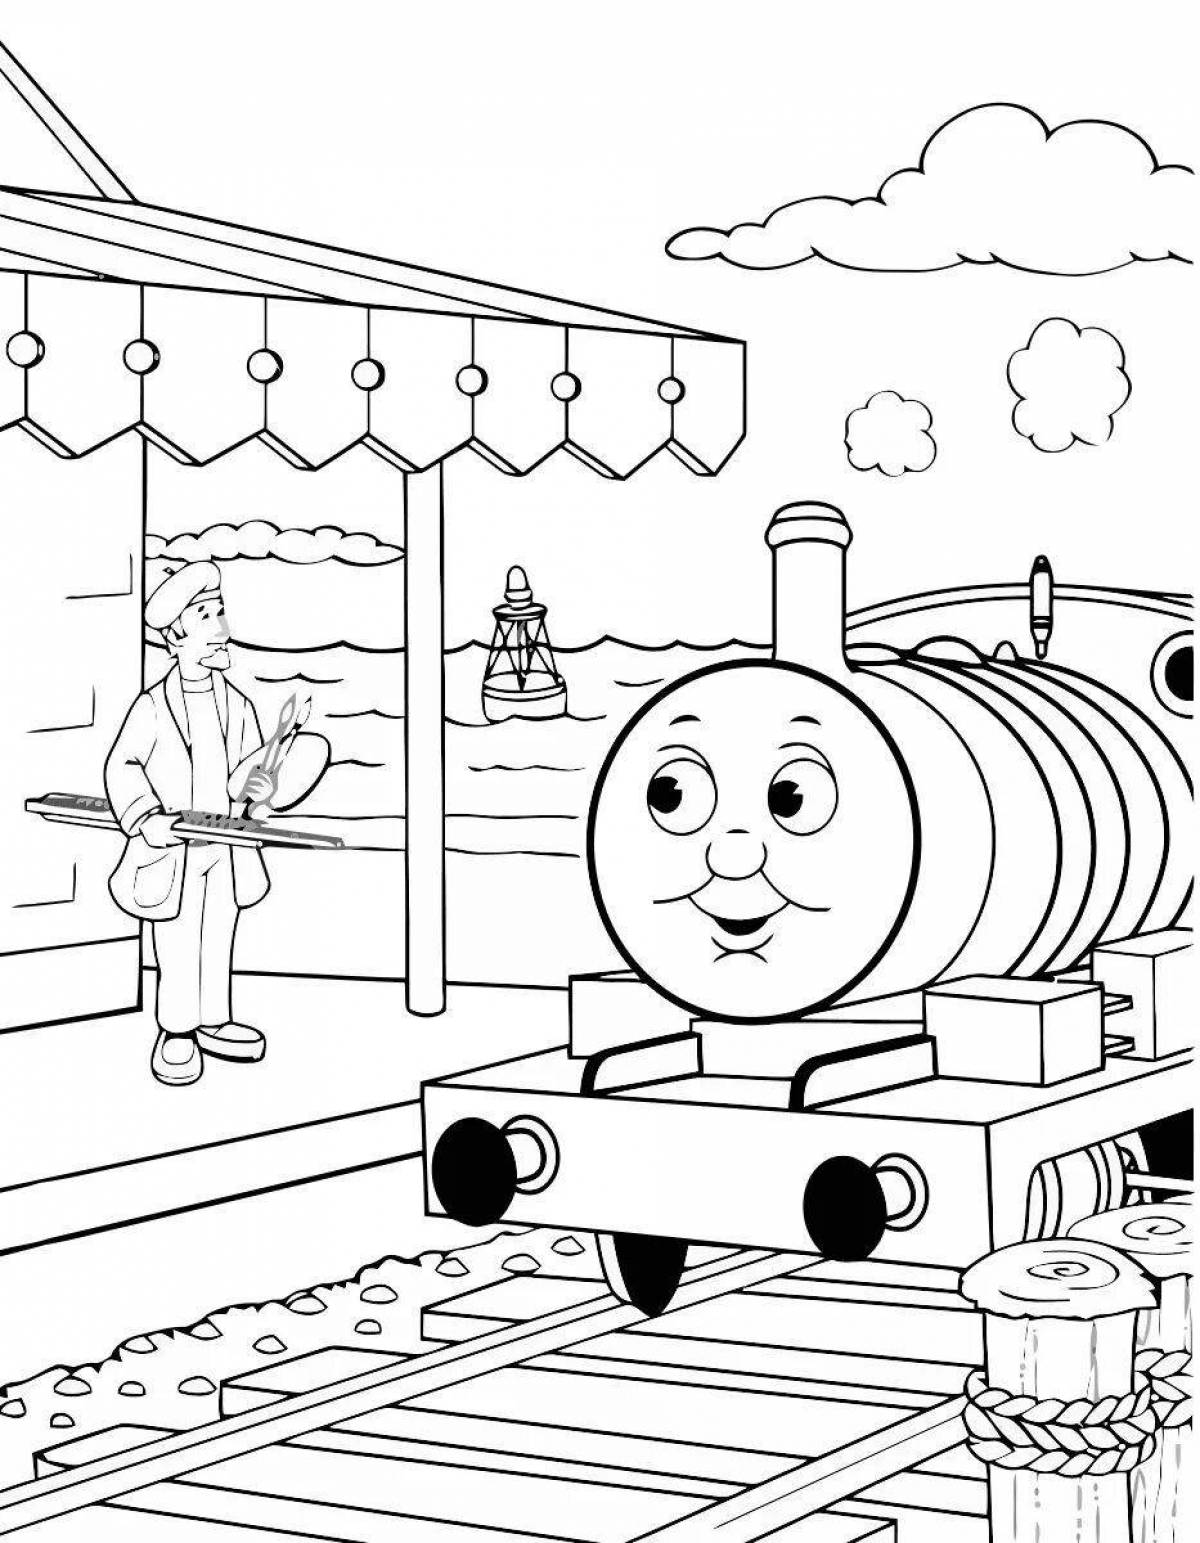 Креативная раскраска поезда томаса для детей